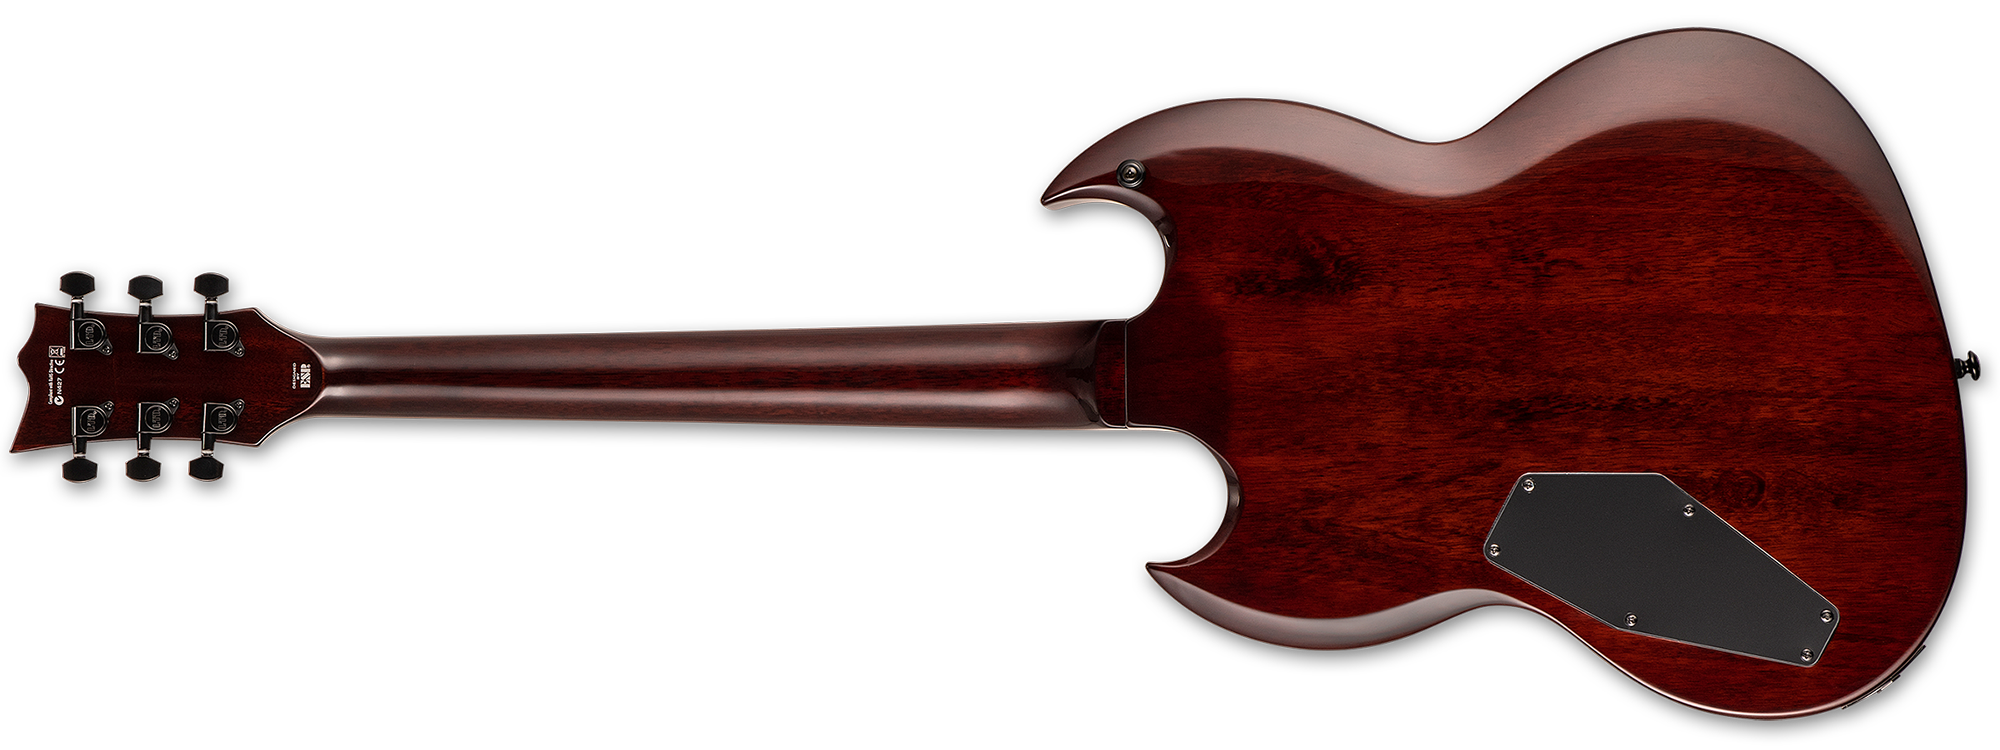 Ltd Viper-256 Hh Ht Jat - Dark Brown Sunburst - Double cut electric guitar - Variation 2